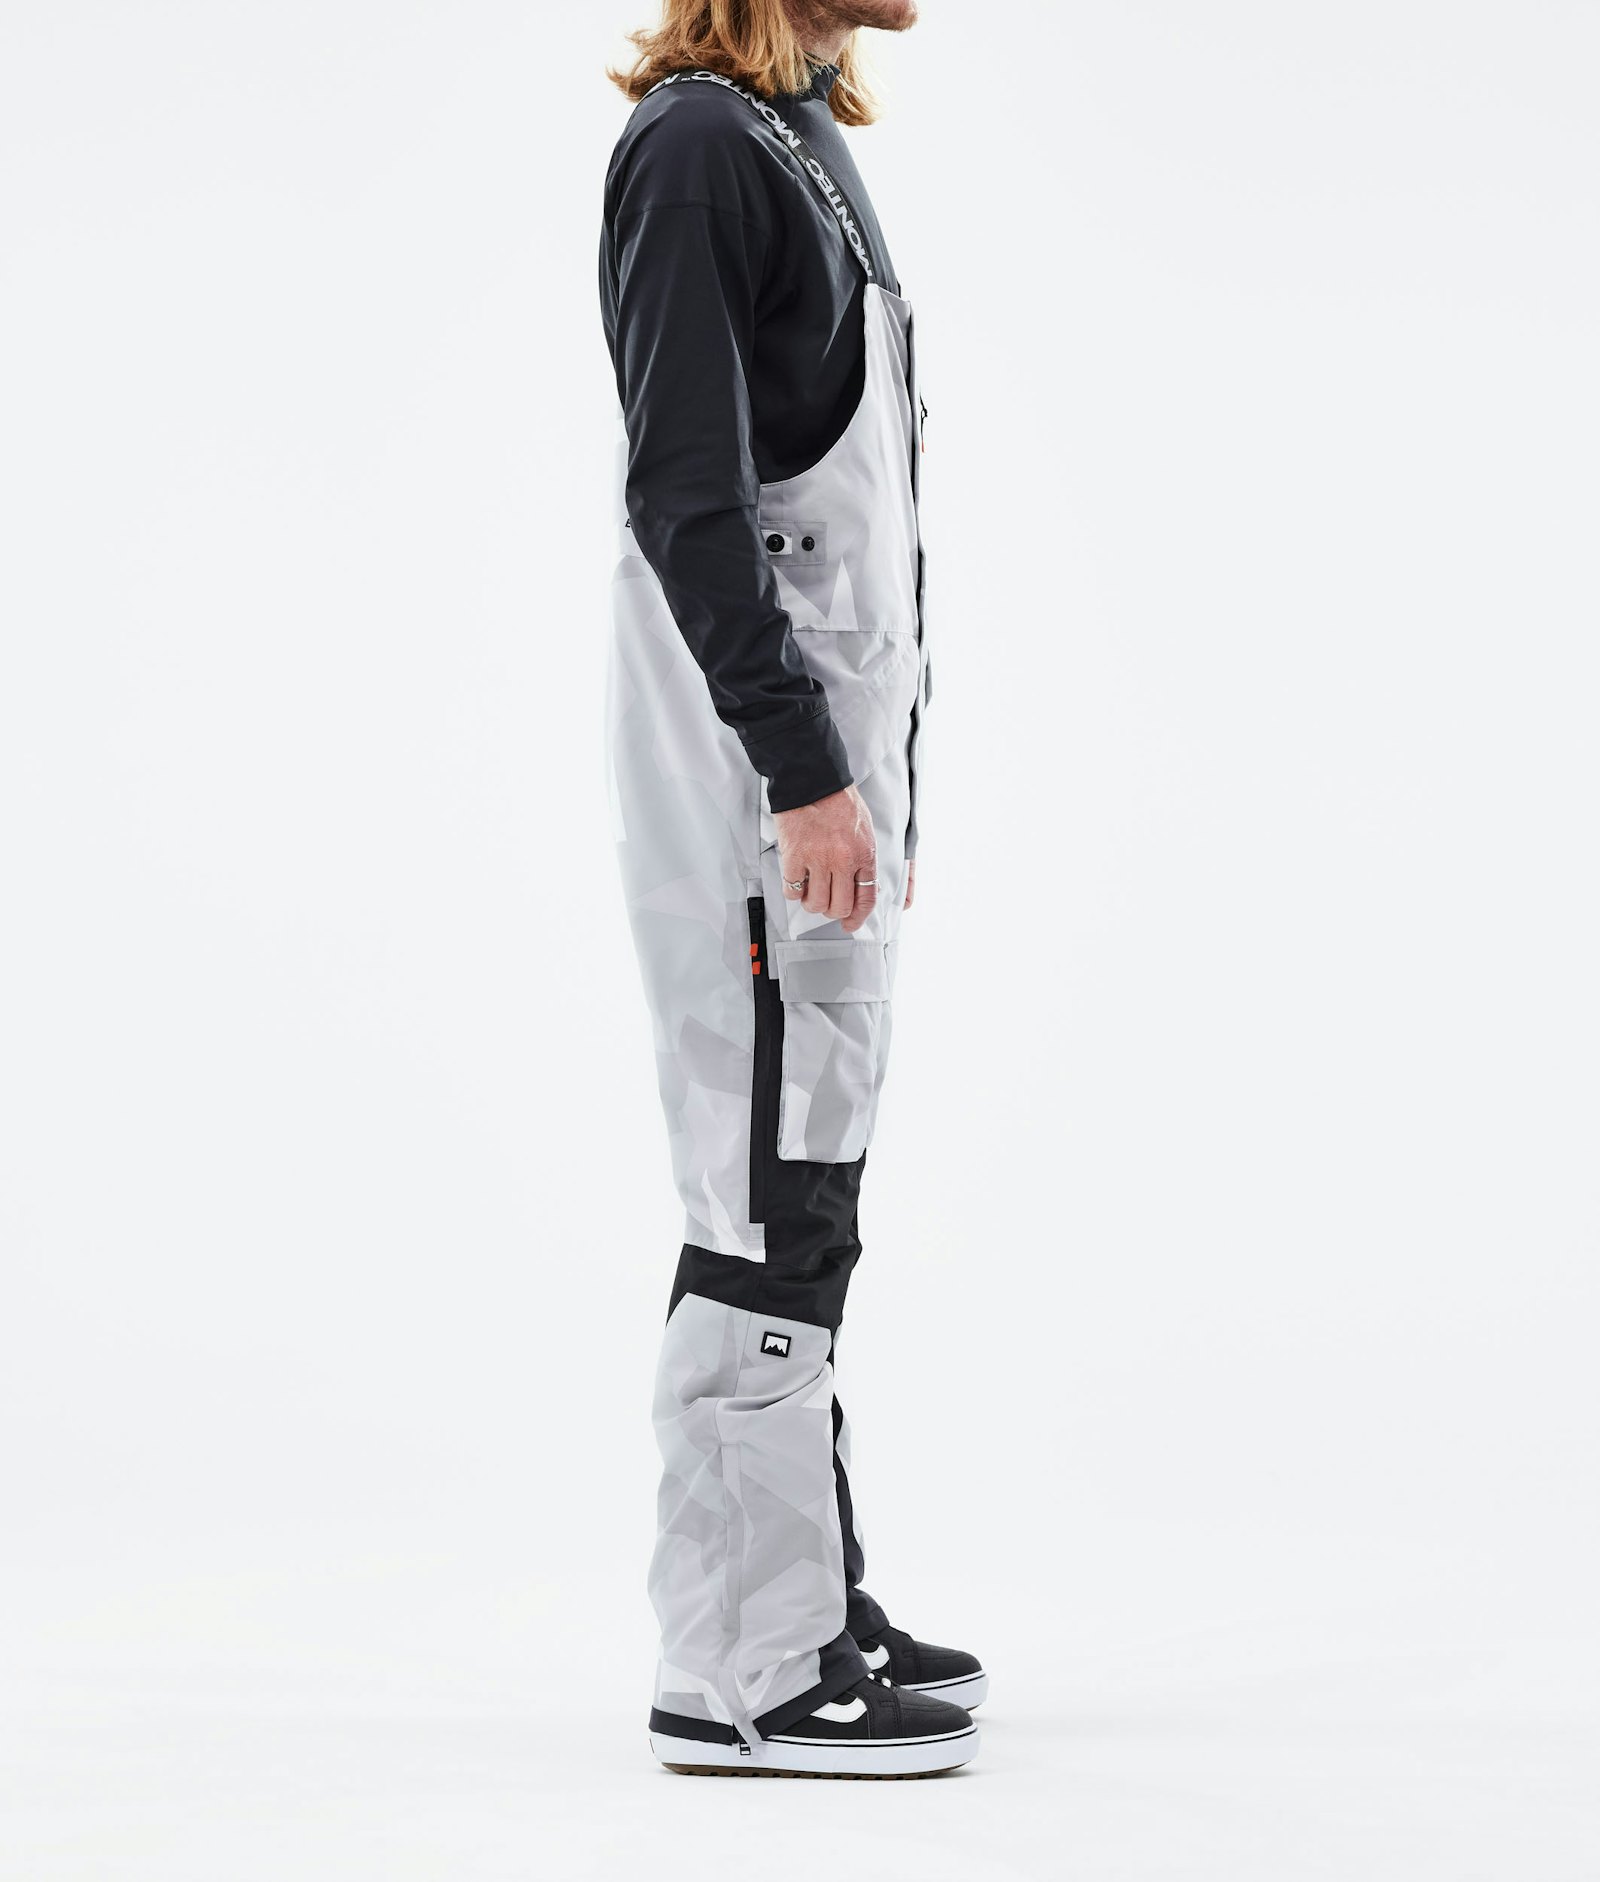 Fawk 2021 Snowboard Pants Men Snow Camo/Black